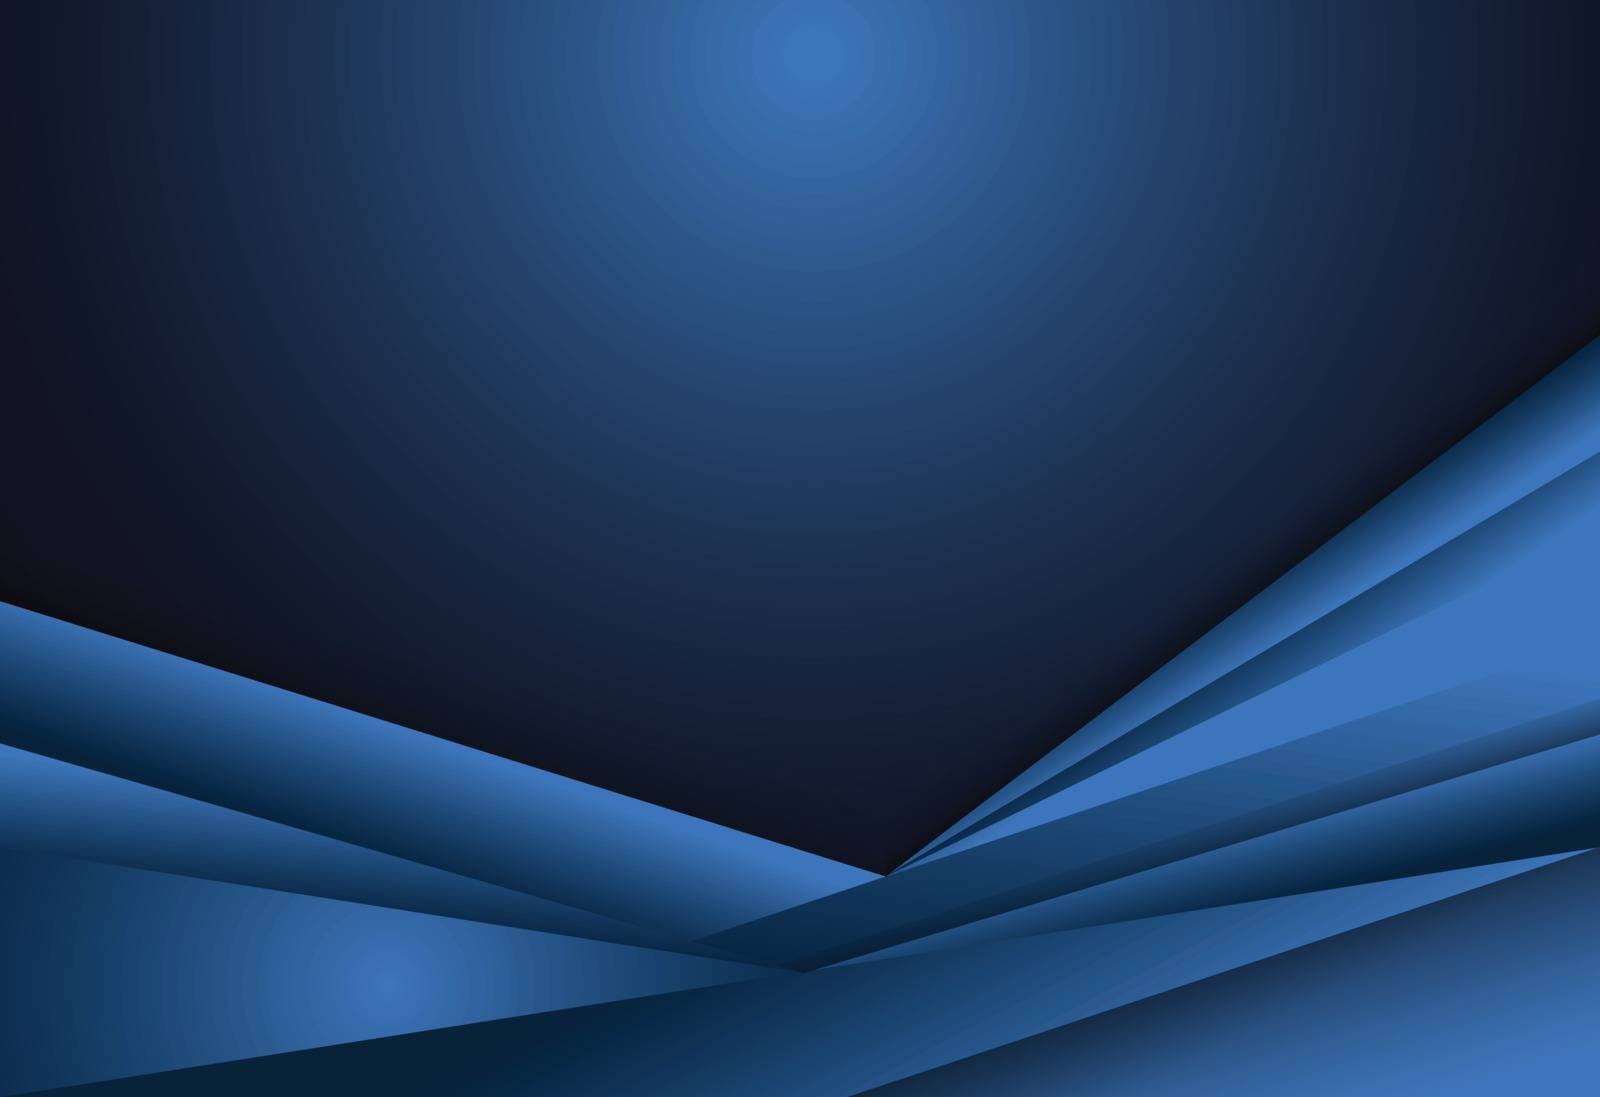 Blue gradient geometric background material design overlap layer  illustration